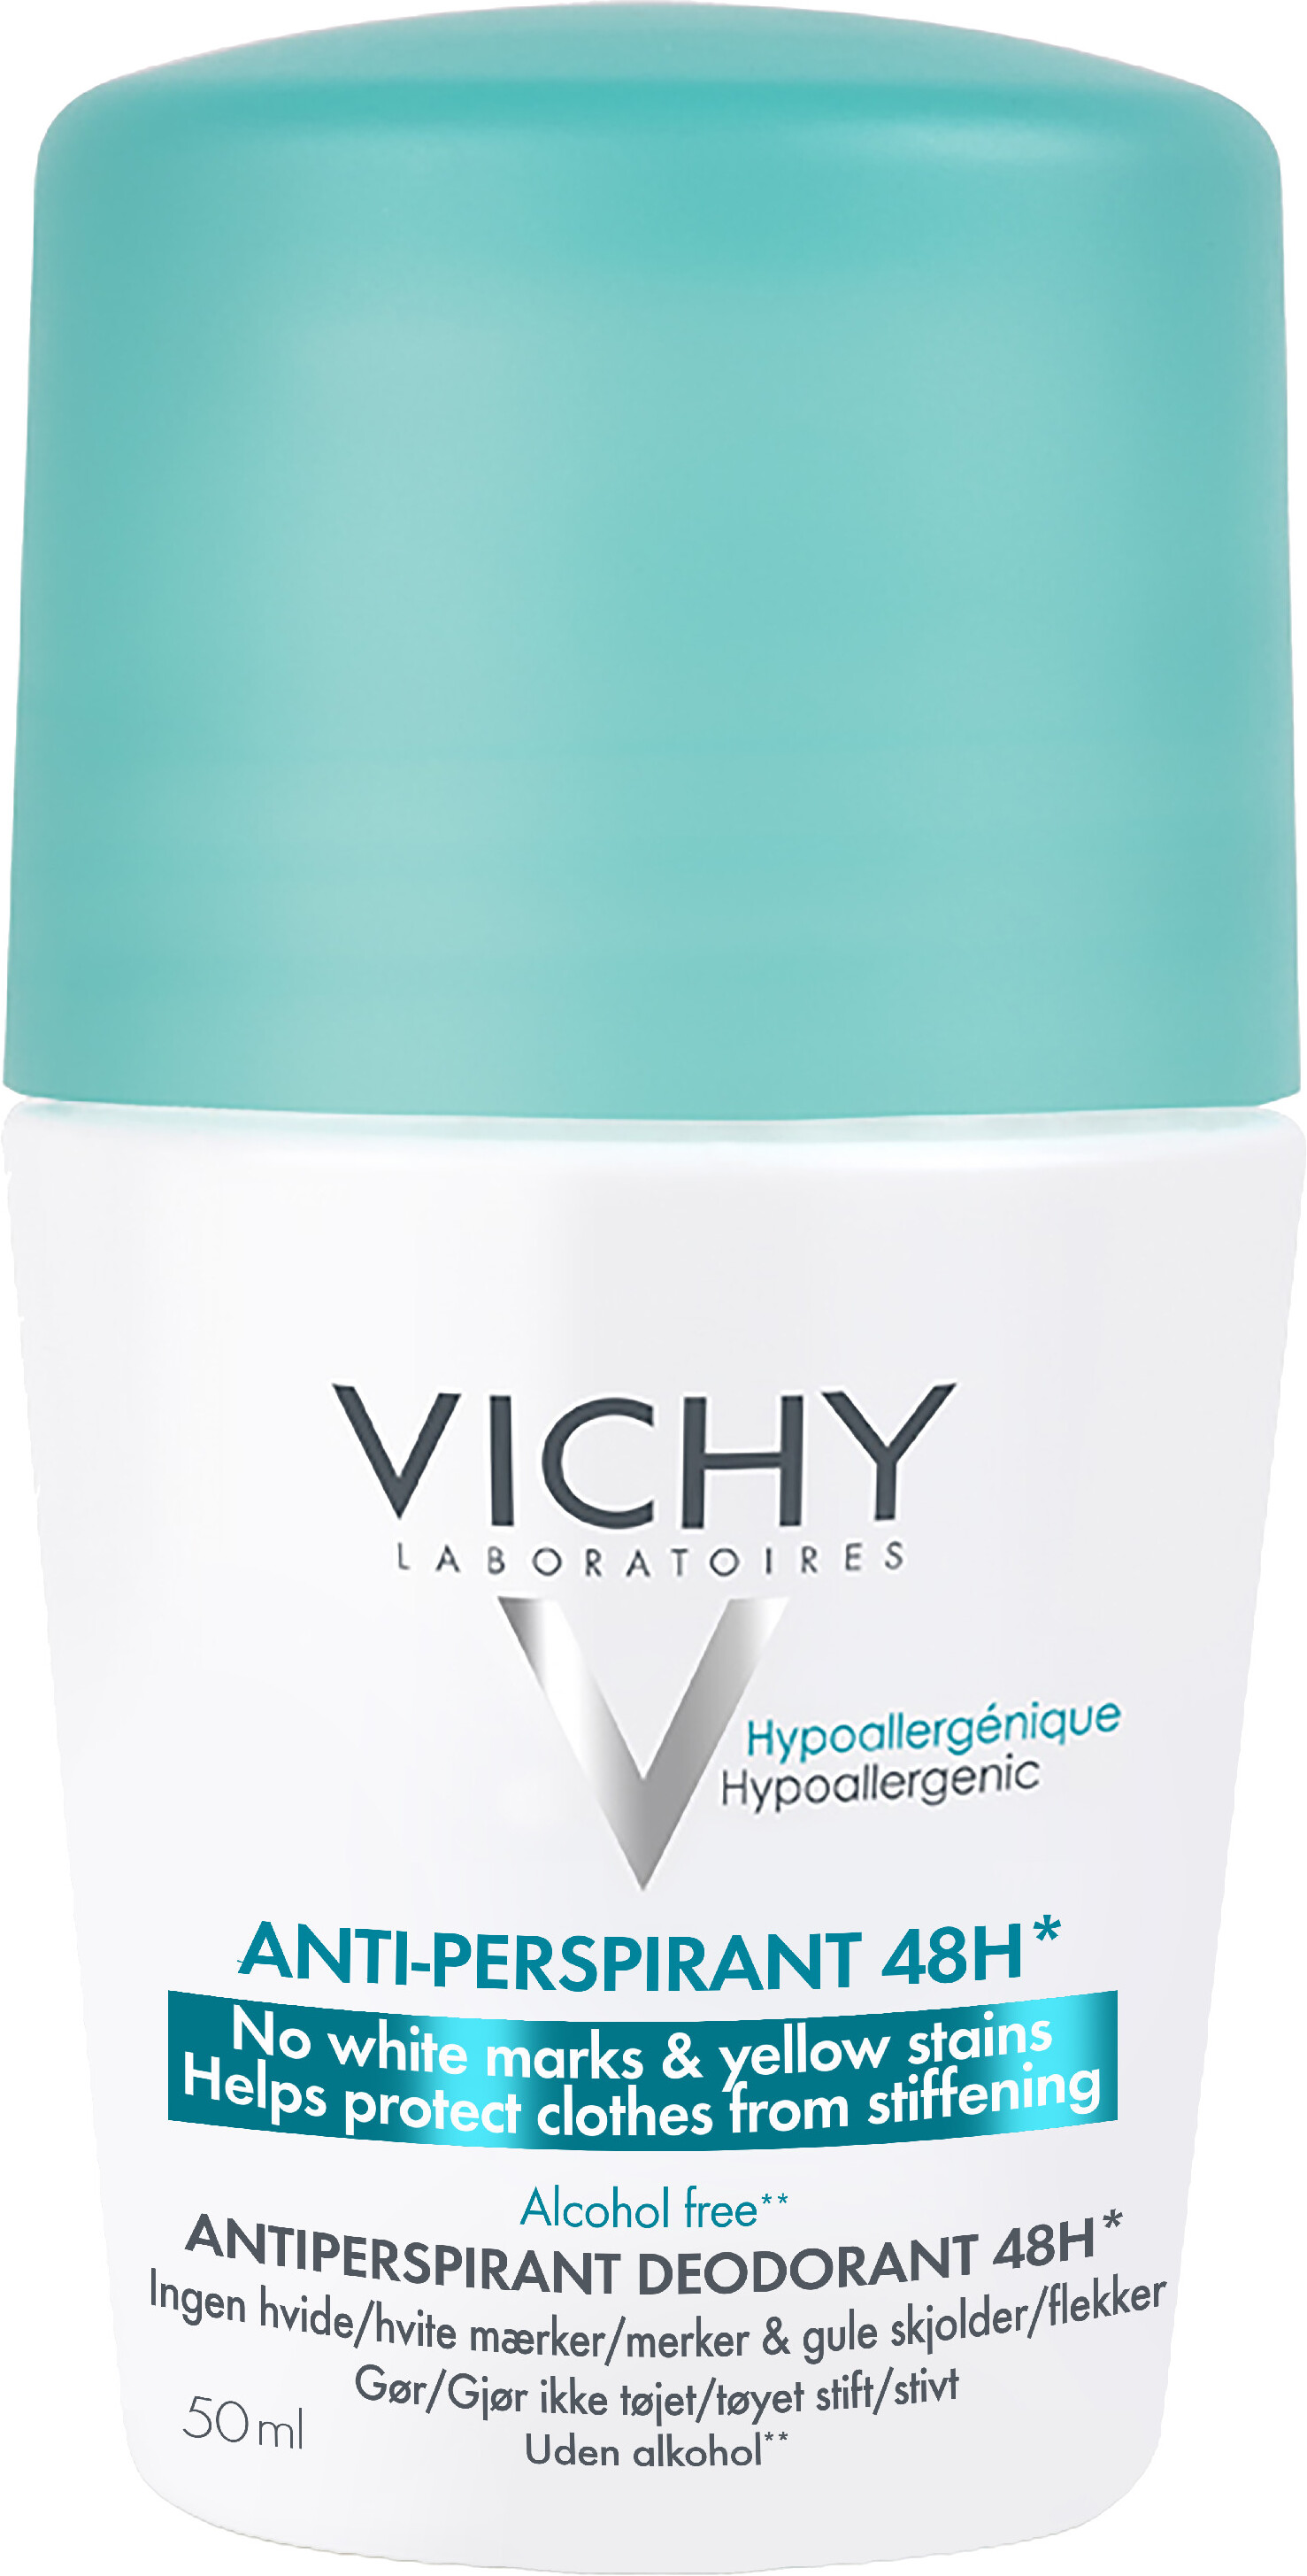 VICHY 48Hr Anti-Perspirant Deodorant 50 ml